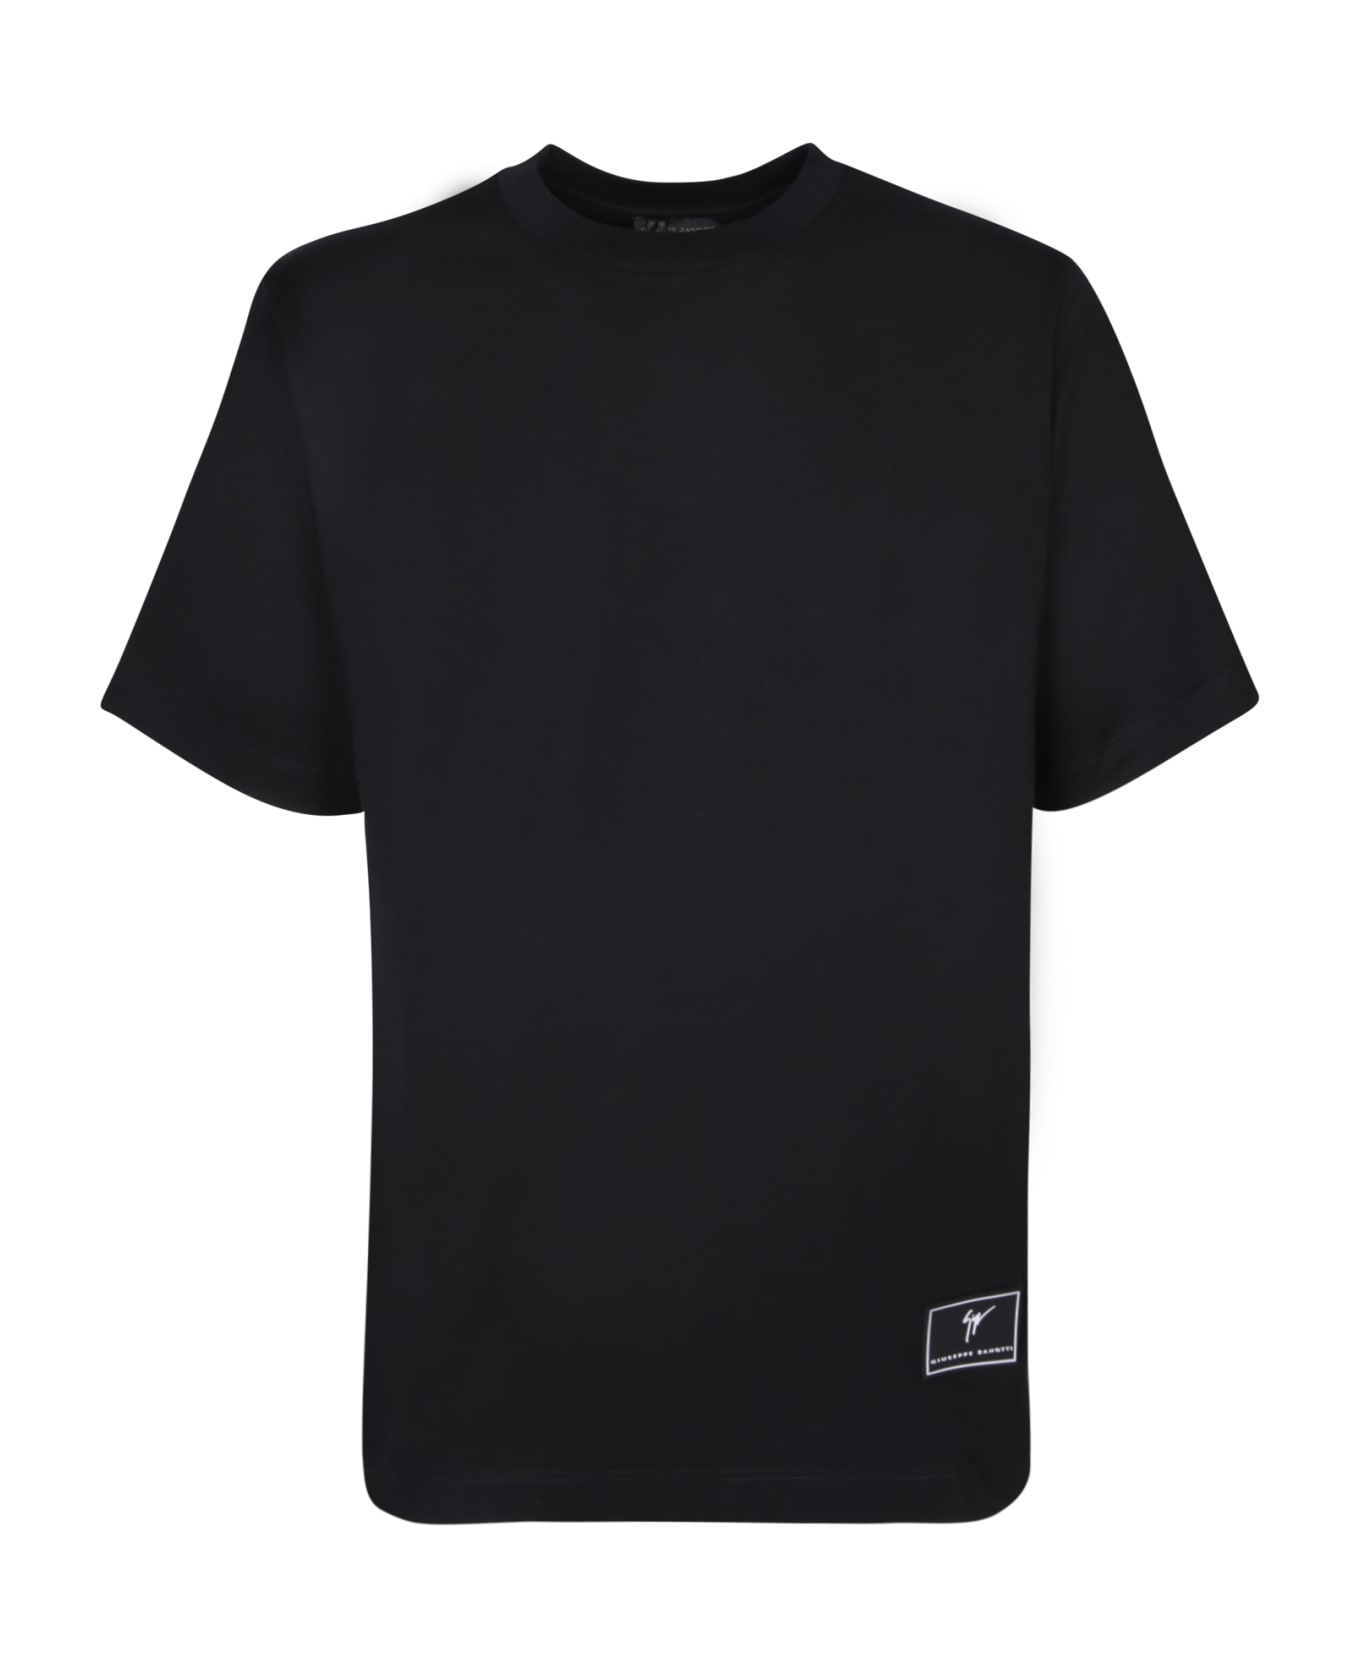 Giuseppe Zanotti Lr-58 Logo T-shirt - Black